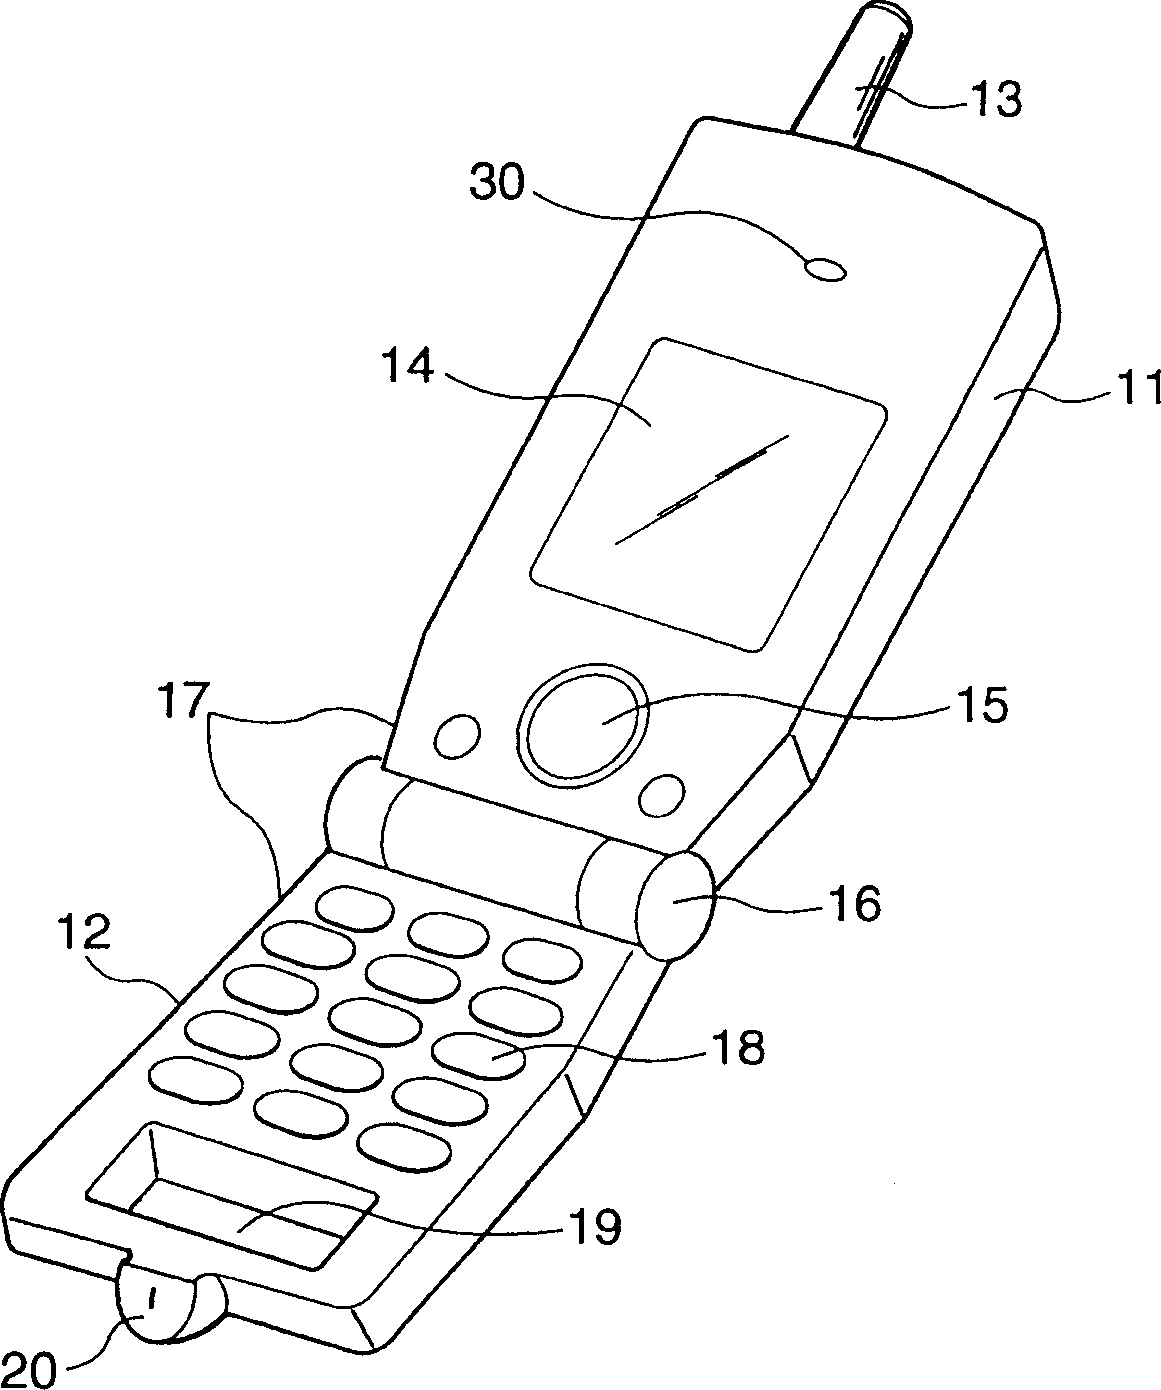 Foldable portable communication terminal device